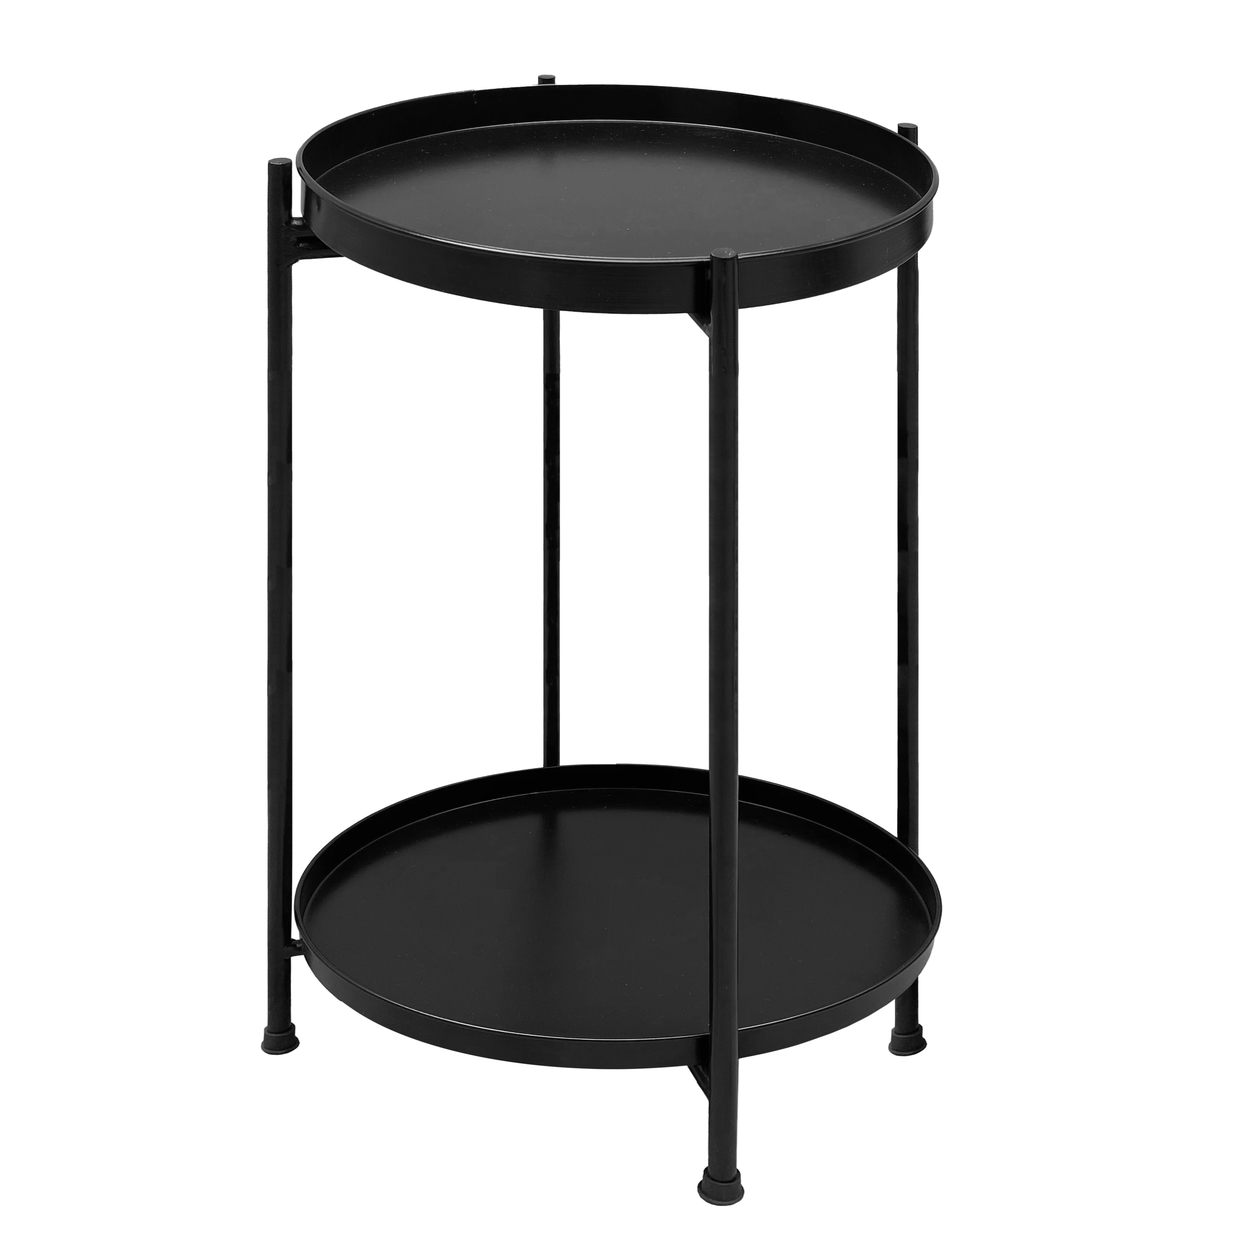 15 Inch Modern Side End Table, Metal Round Tray Top, Foldable Legs, Black -Saltoro Sherpi